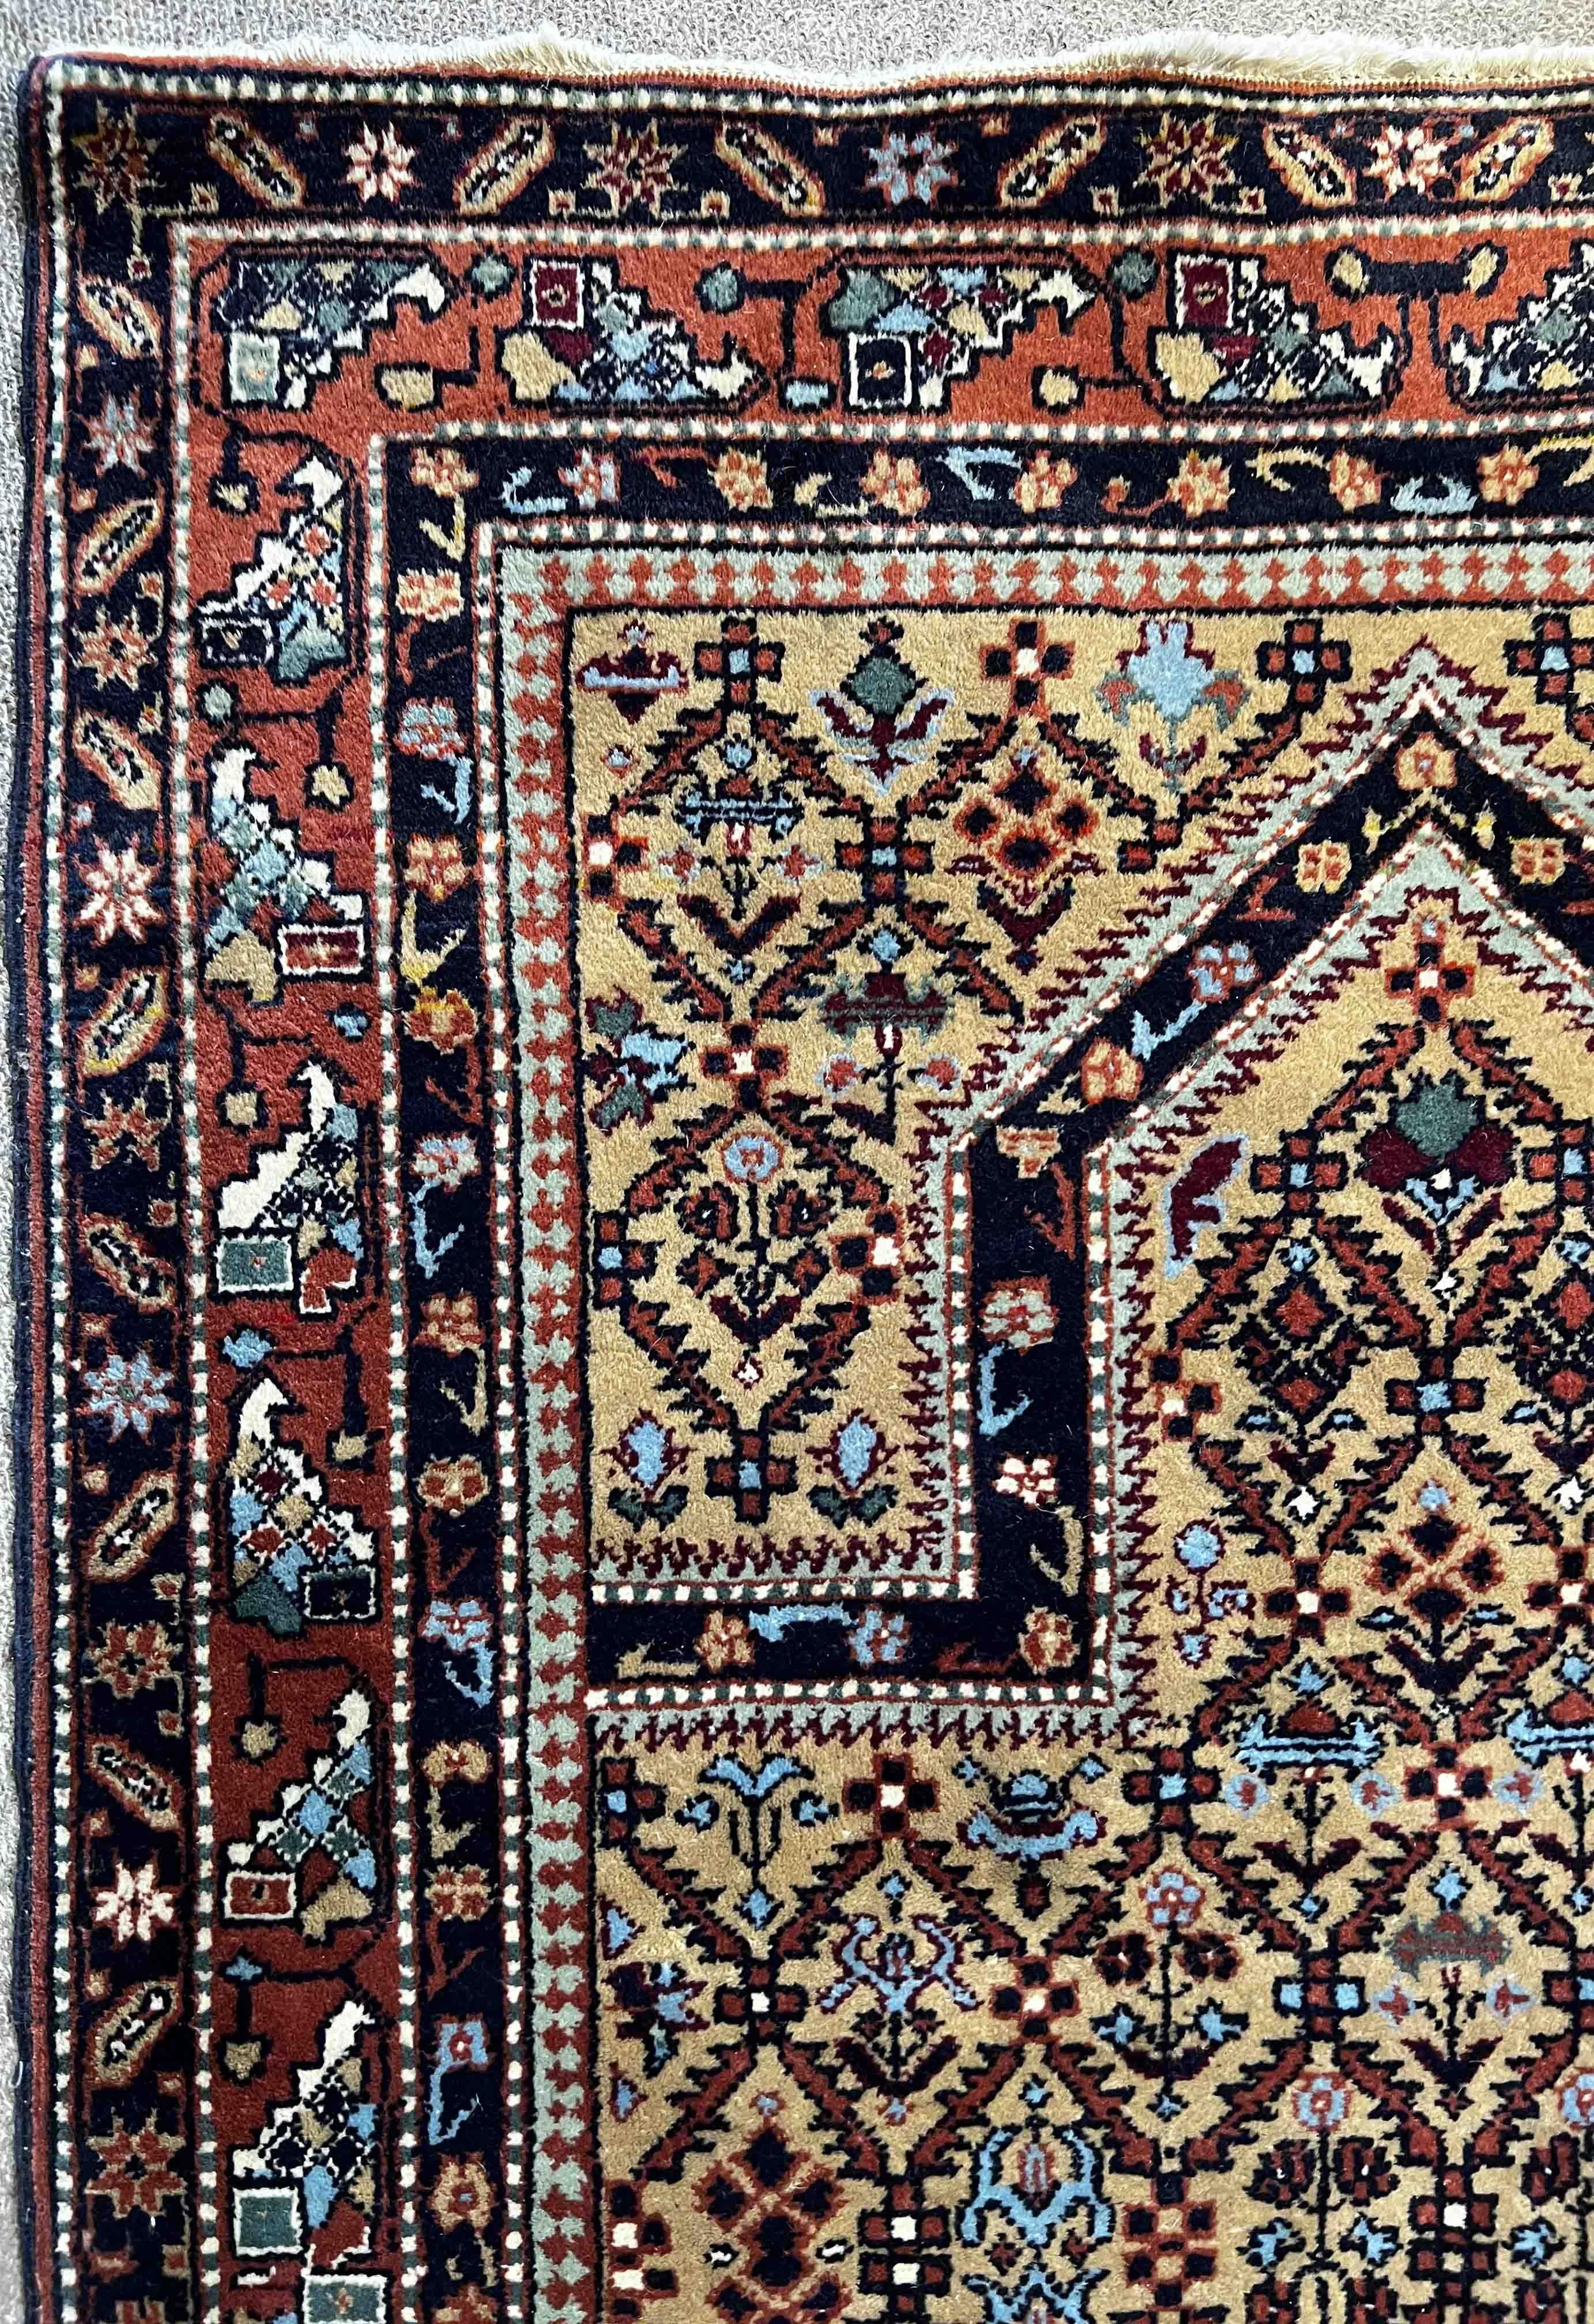  Caucasian Chirvan Carpet, 19th Century - N° 730 For Sale 2